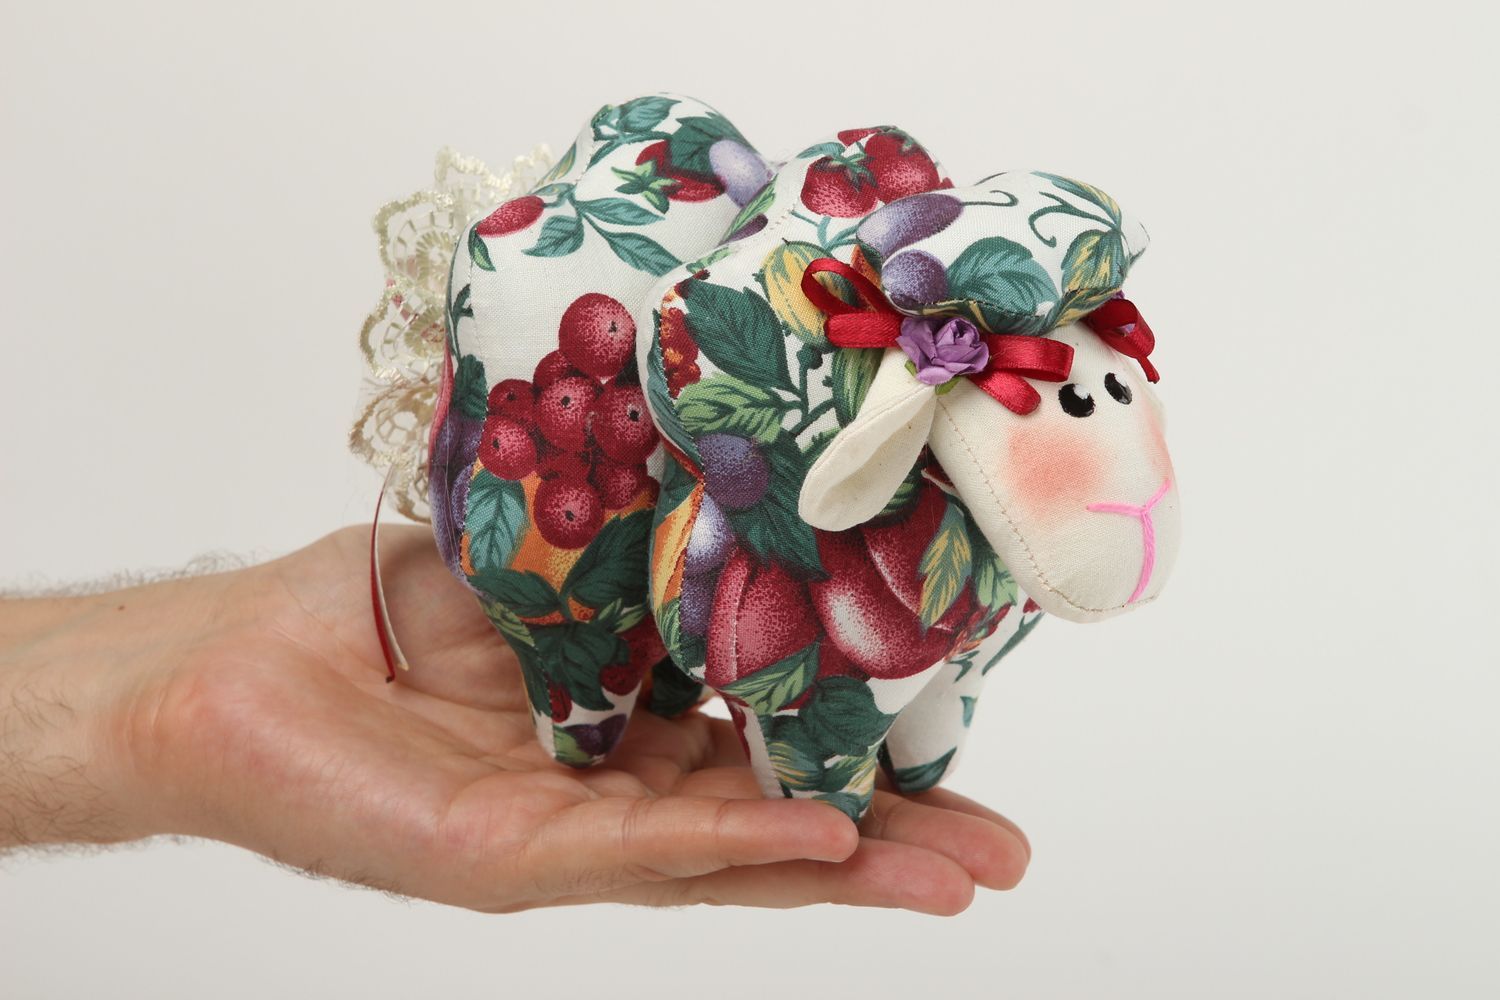 Juguete artesanal con forma de oveja peluche para regalar souvenir original foto 5